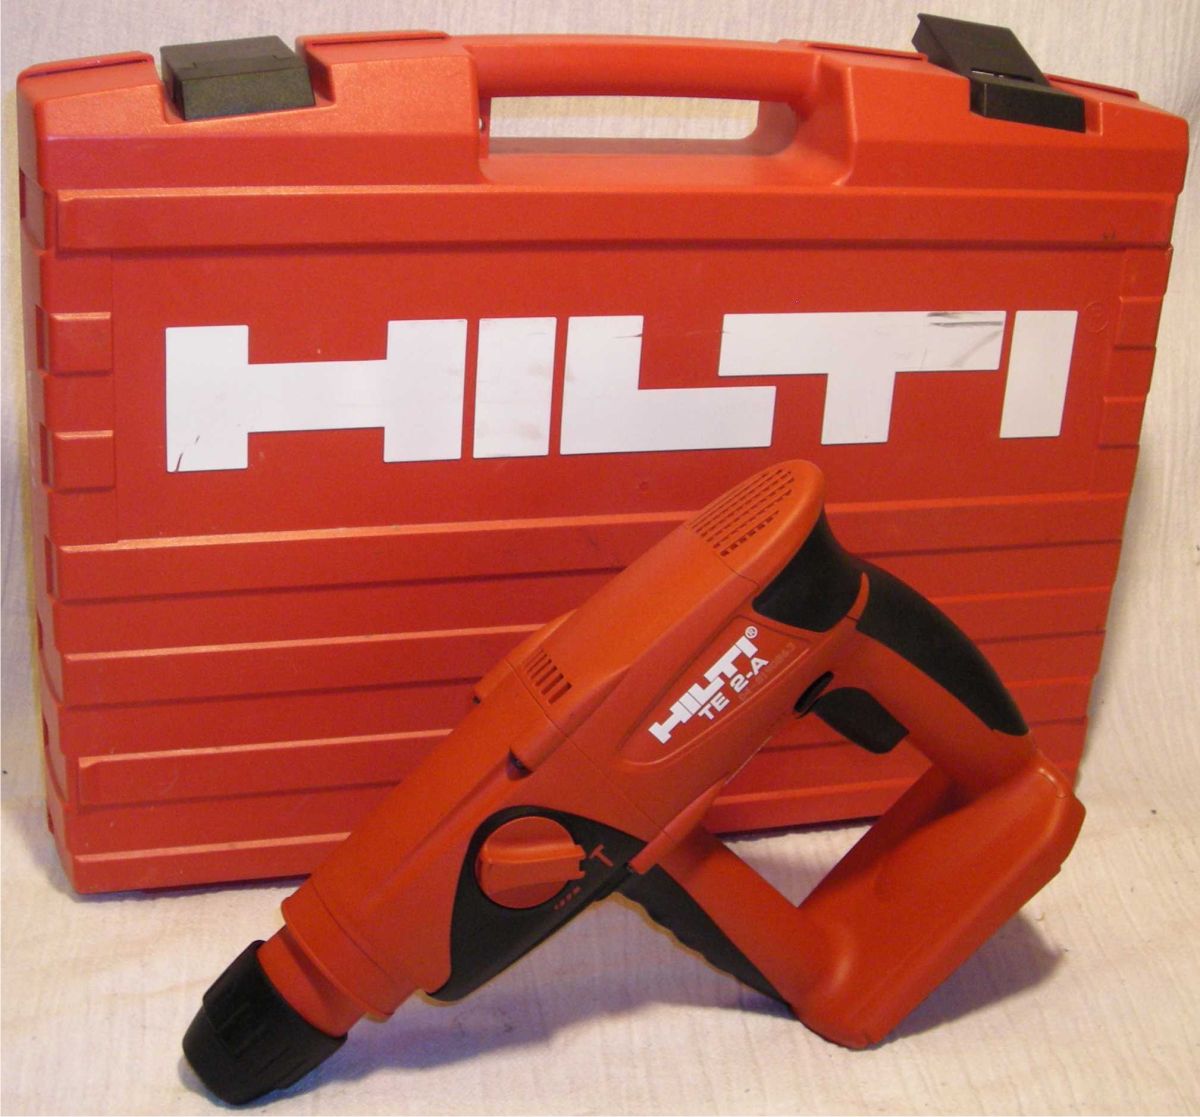 Hilti screw Kit and a Drilling Machine